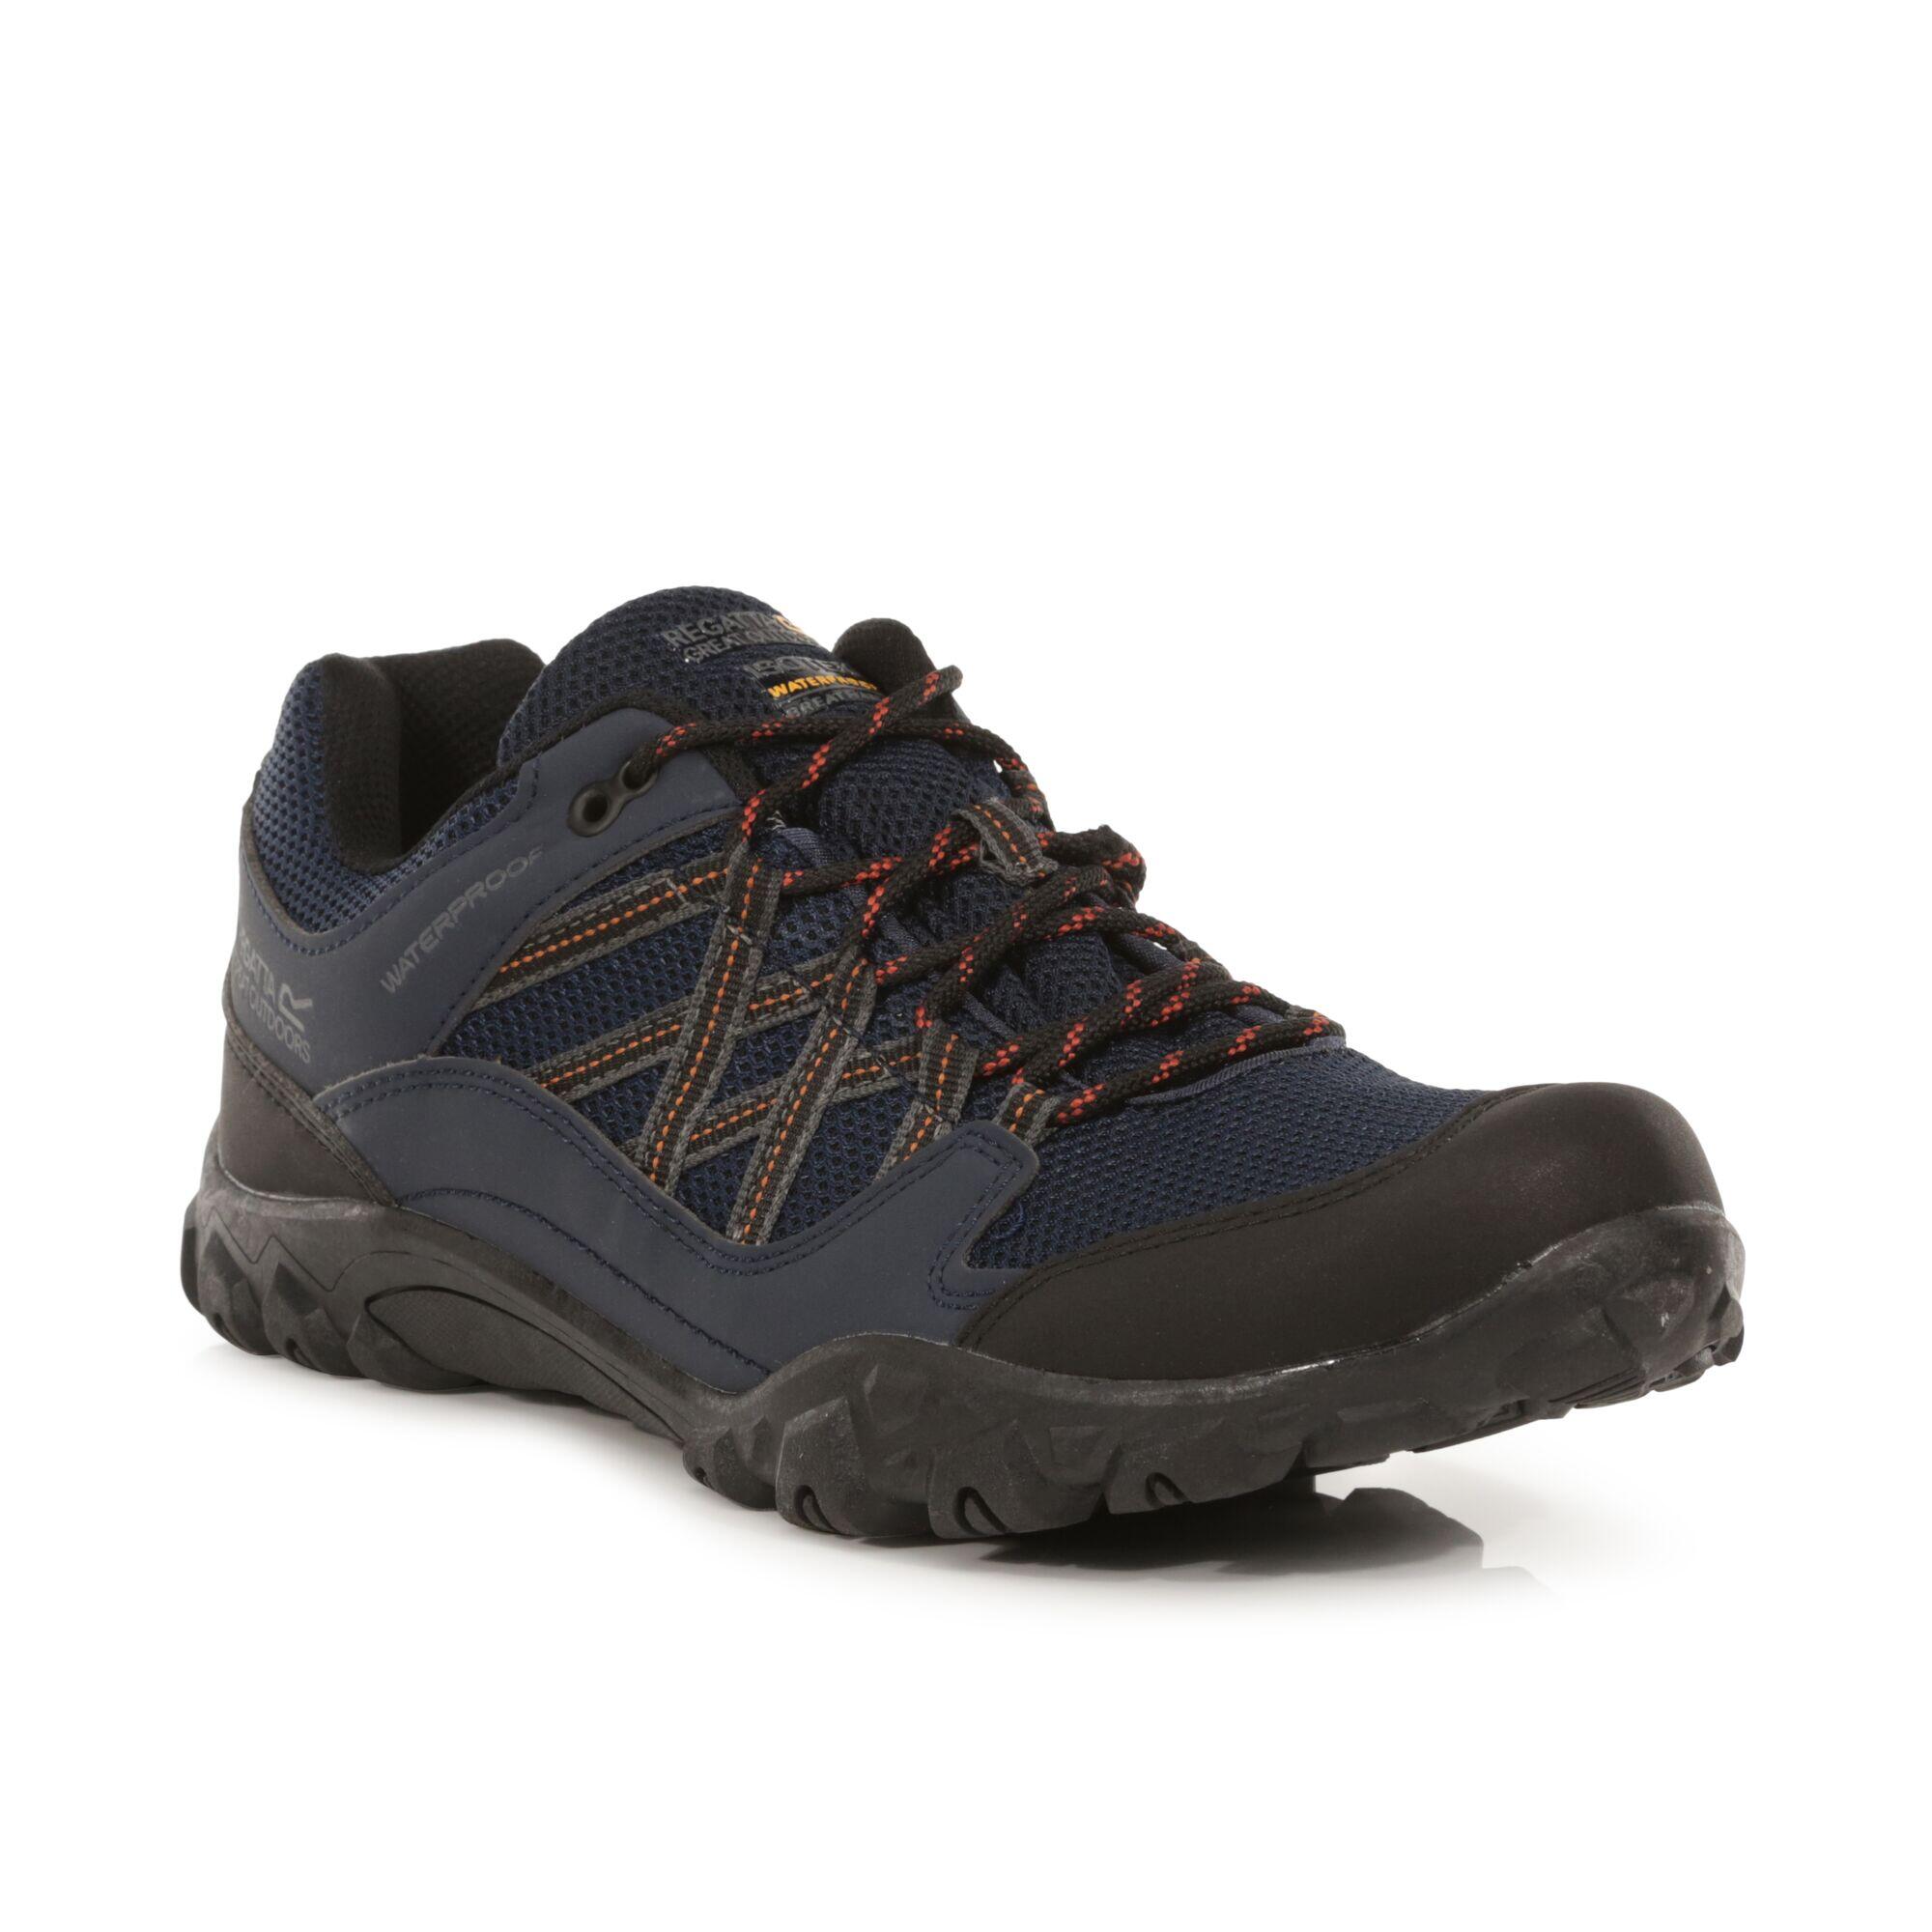 Men's Edgepoint III Waterproof Walking Shoes 2/5